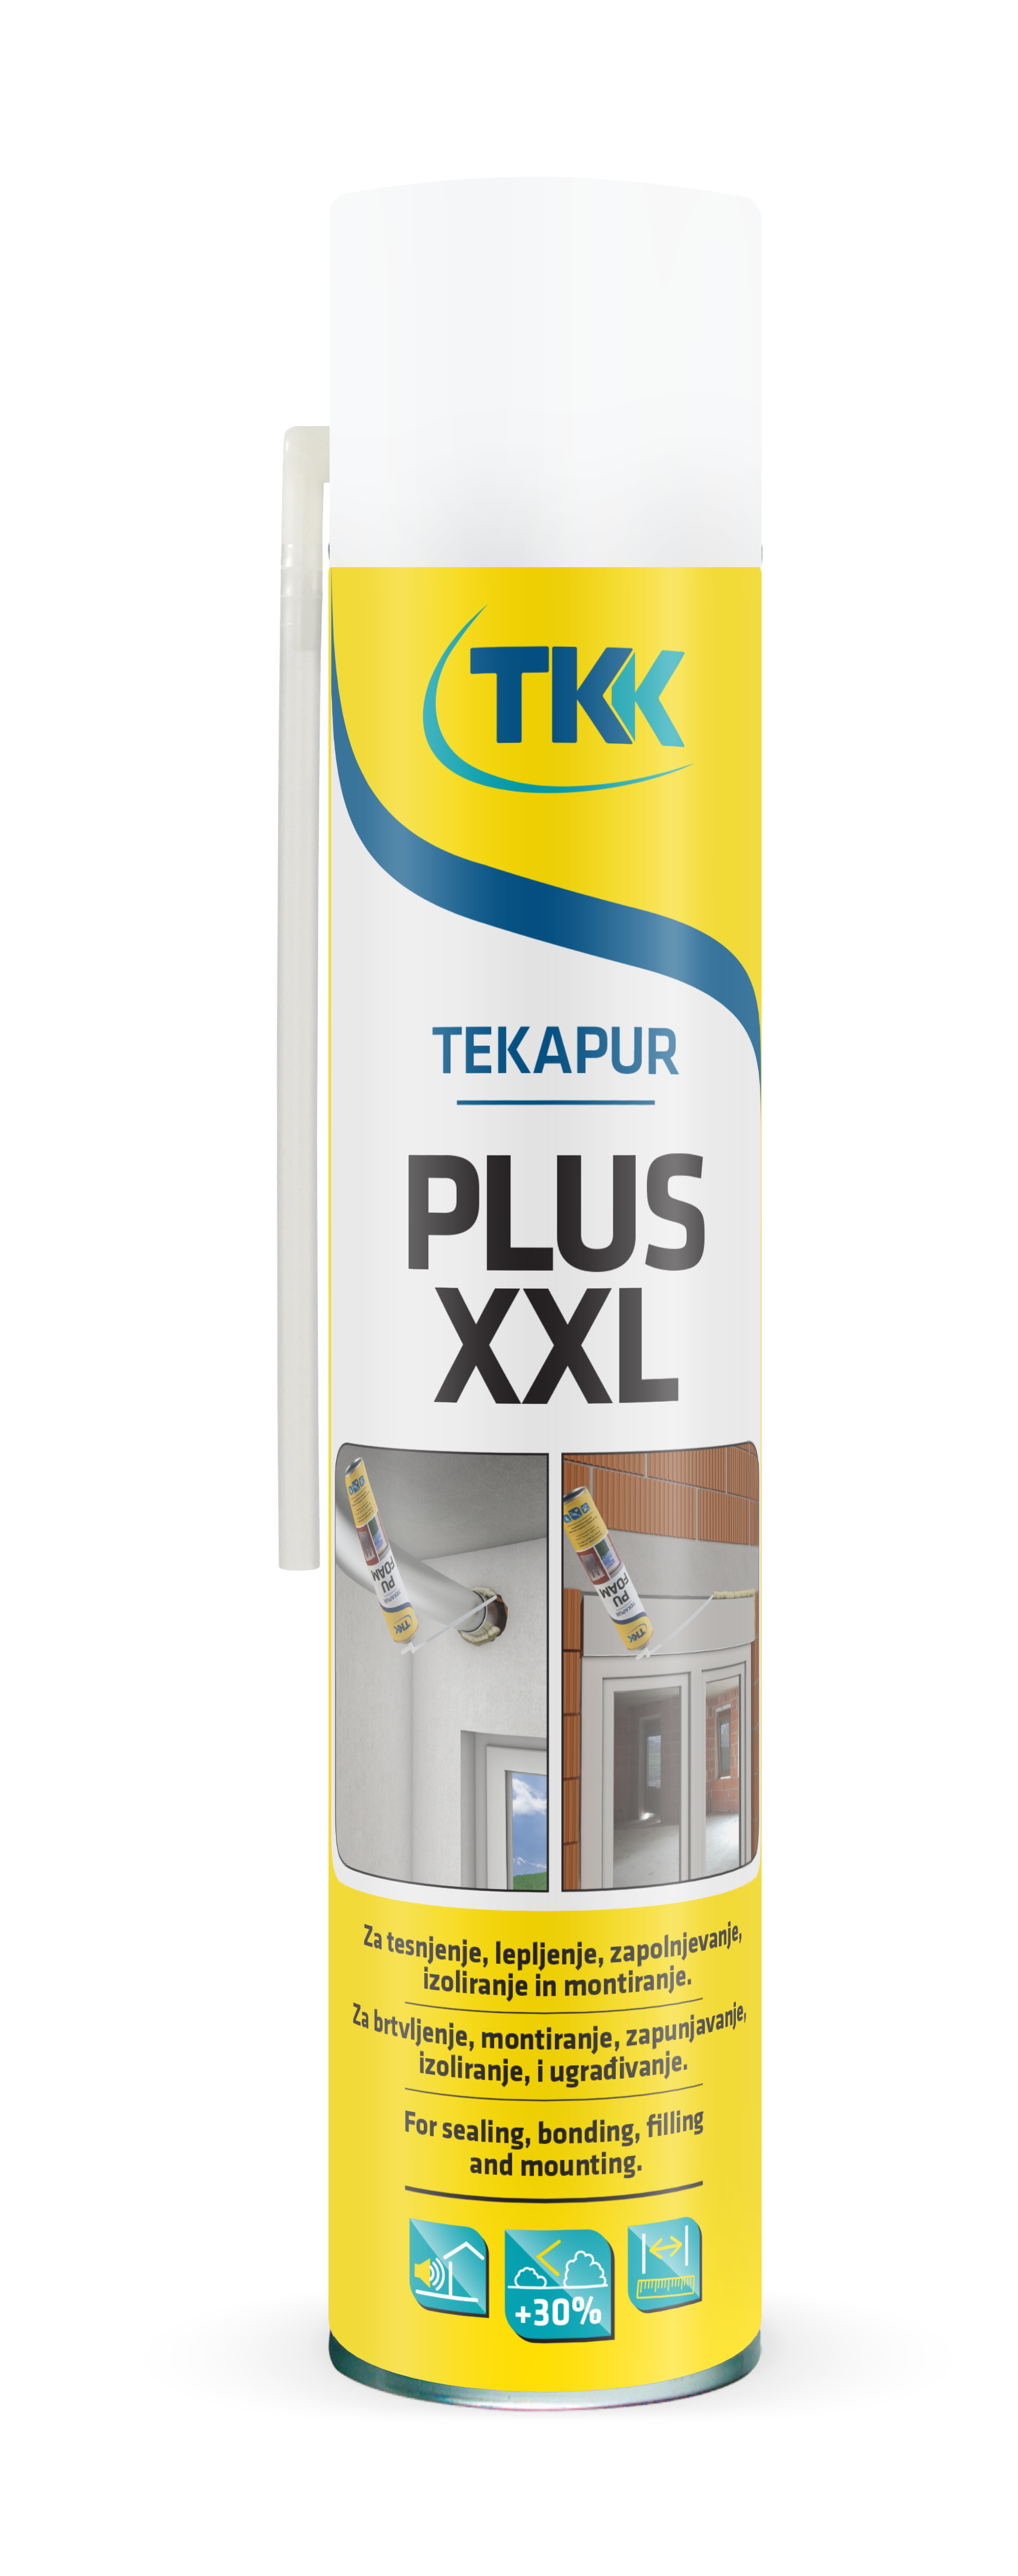 TEKAPUR Spray Plus XXL бытовая монтажная пена (увелич. выход) 750 мл.